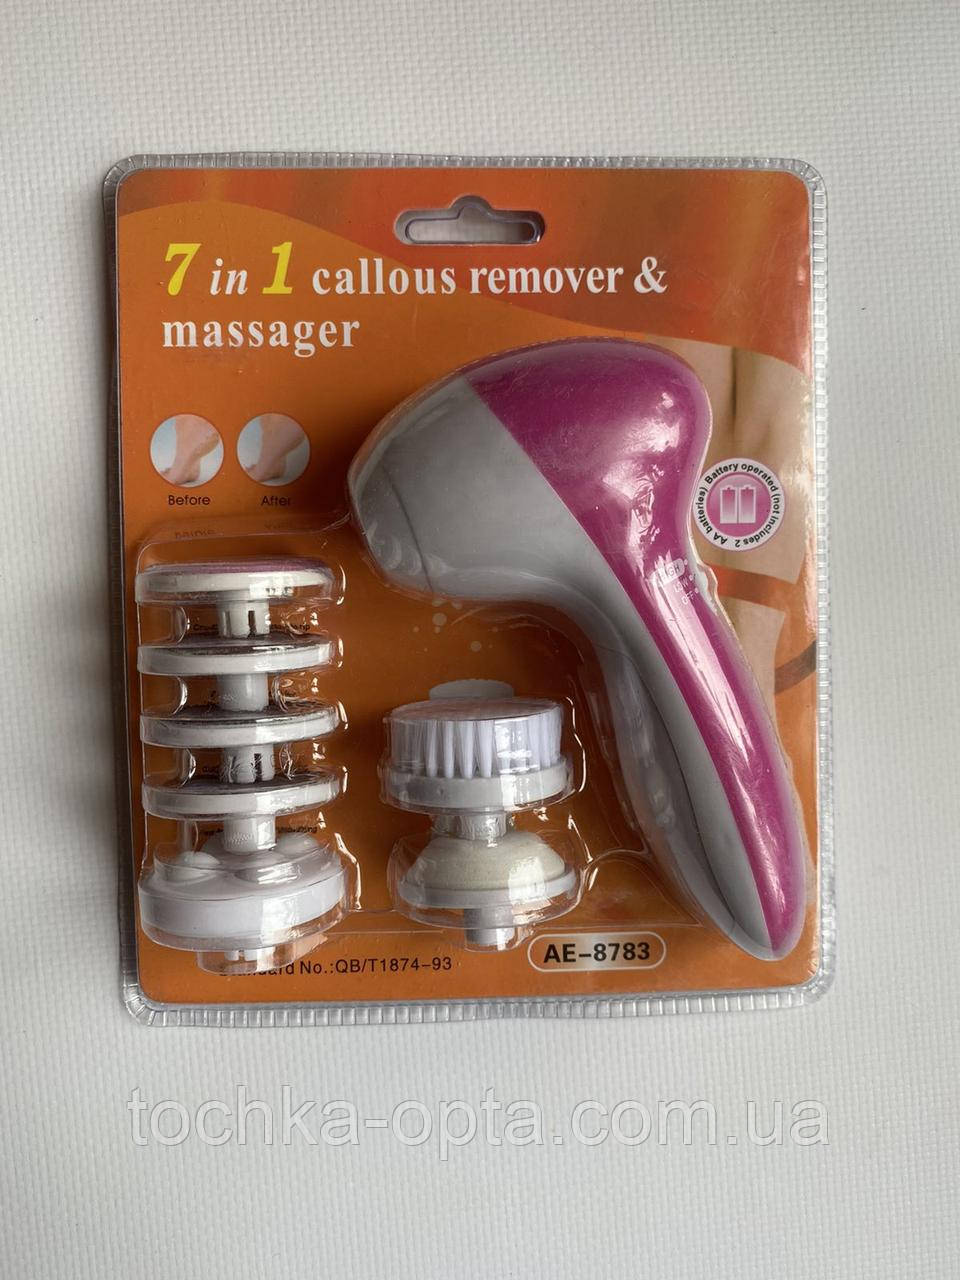 Масажер універсальний Callous remover&massager 7 in 1